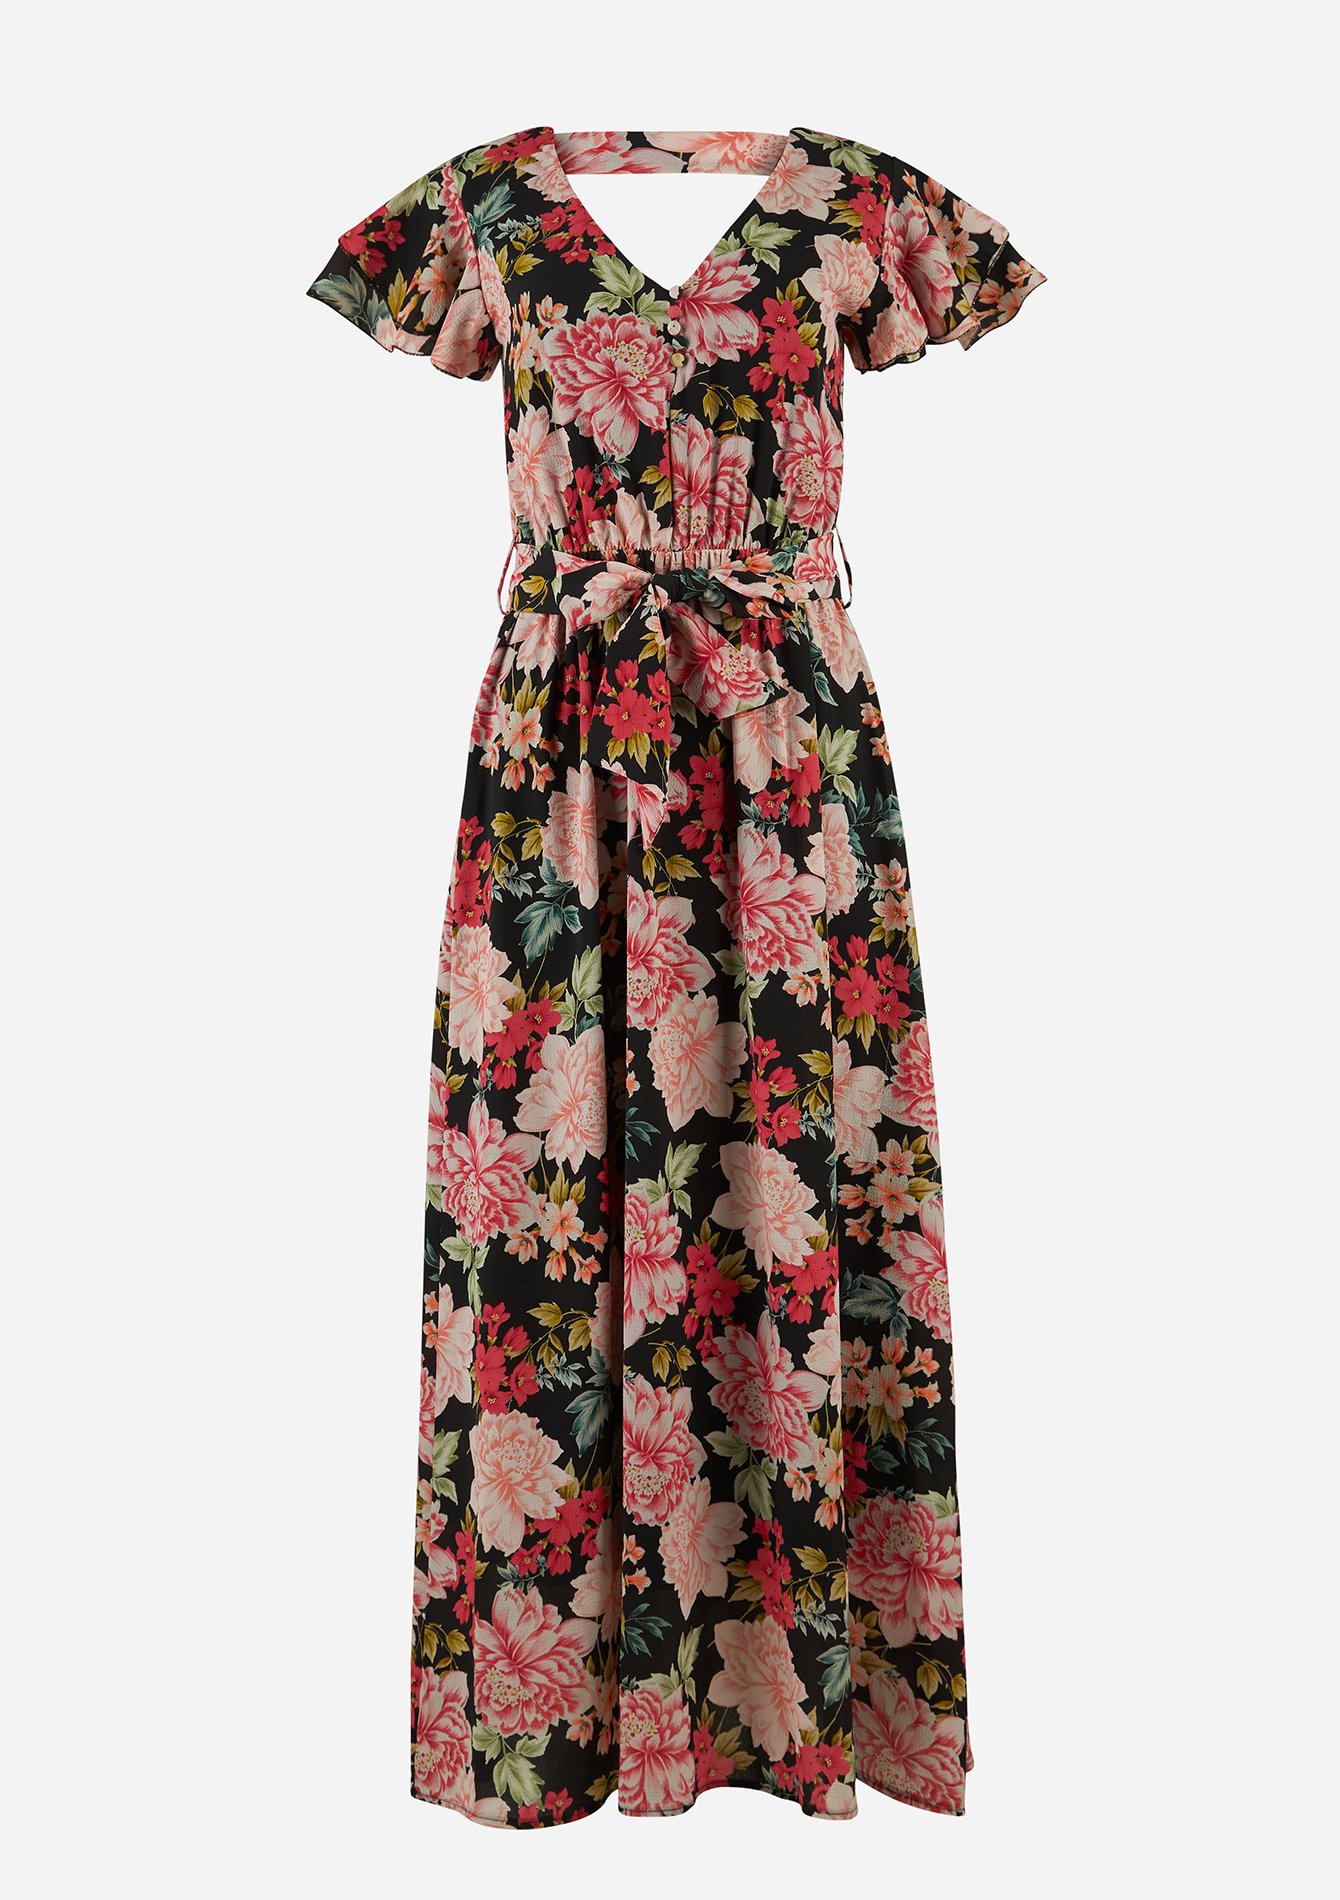 Maxi robe imprimé fleurs - PINK FRAMBOISE - 08601116_5622